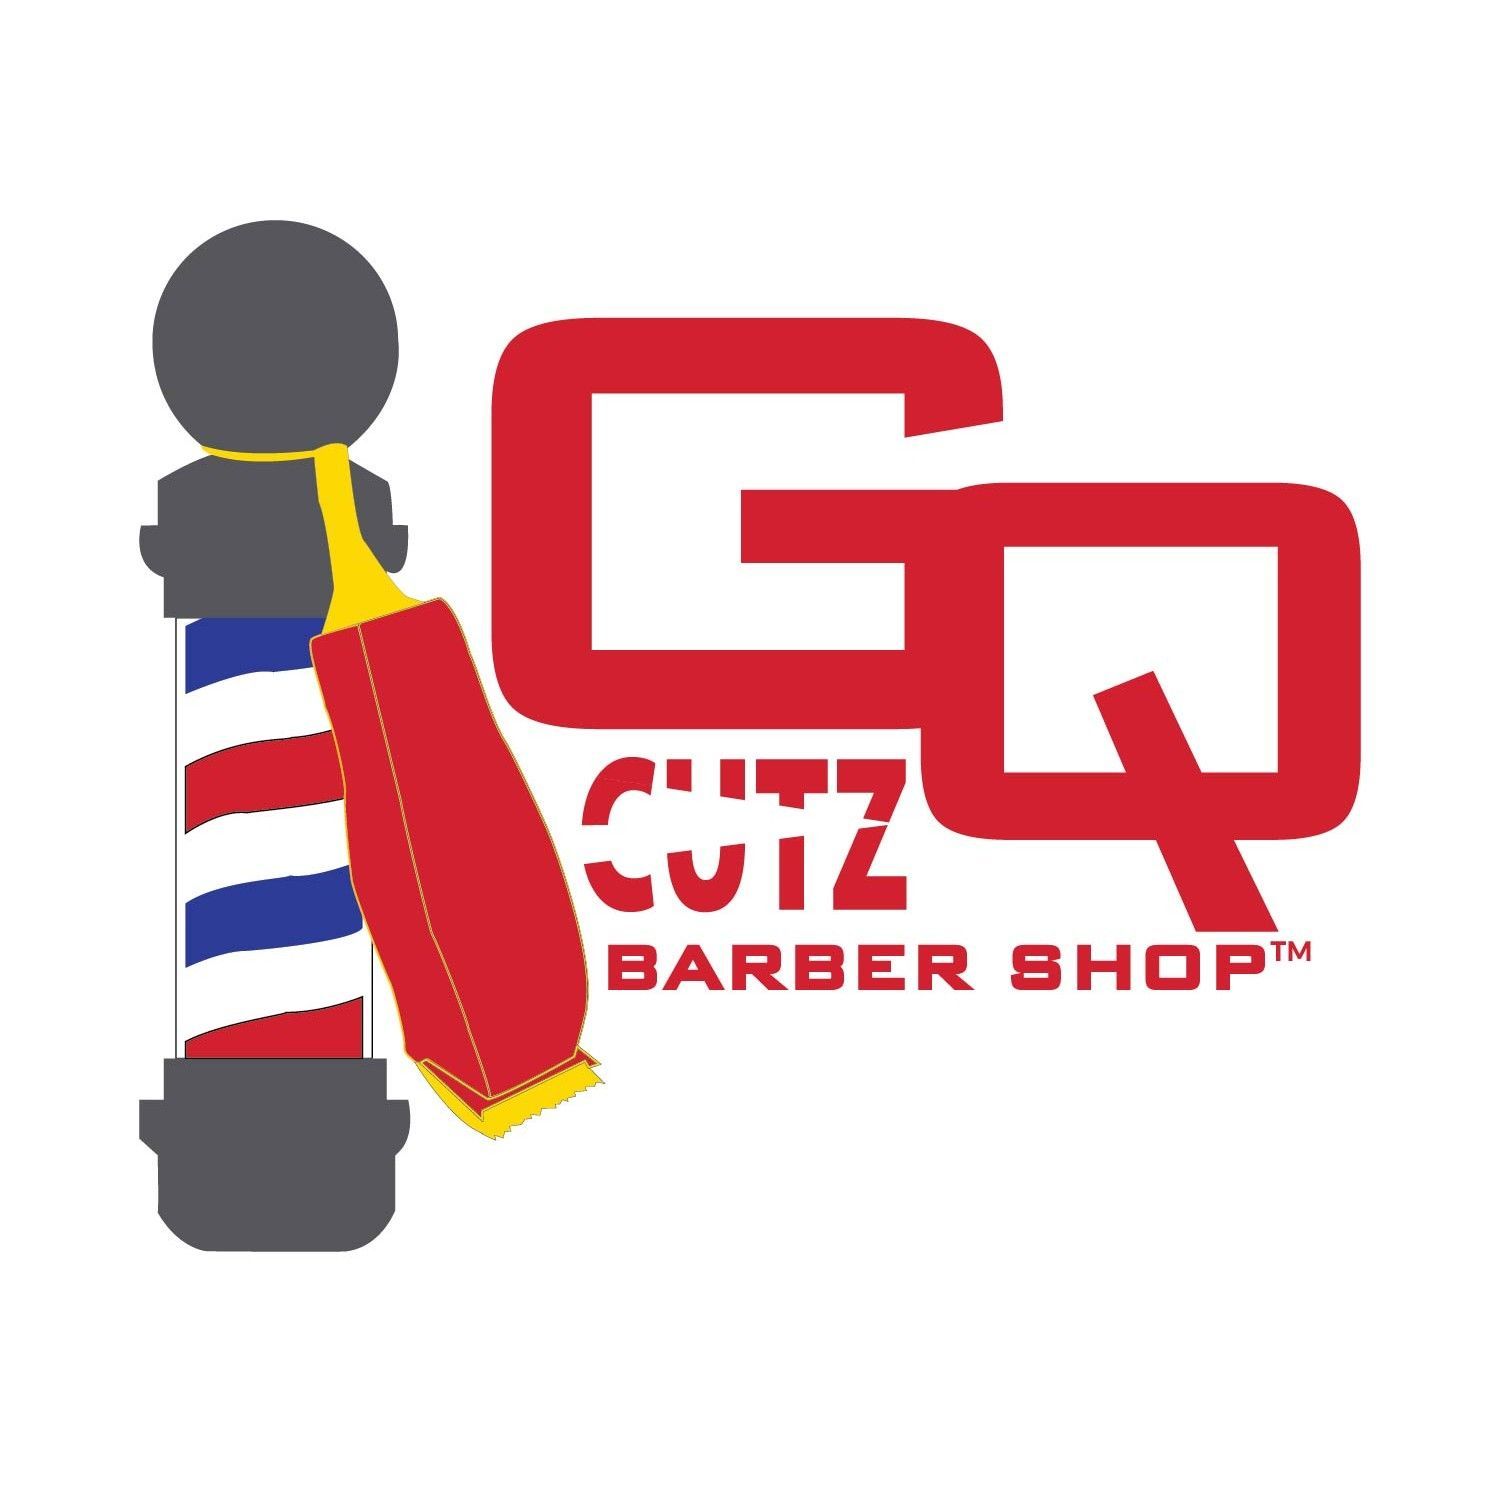 Gq Cutz Barbershop, 5032 E 56th St, Indianapolis, 46226